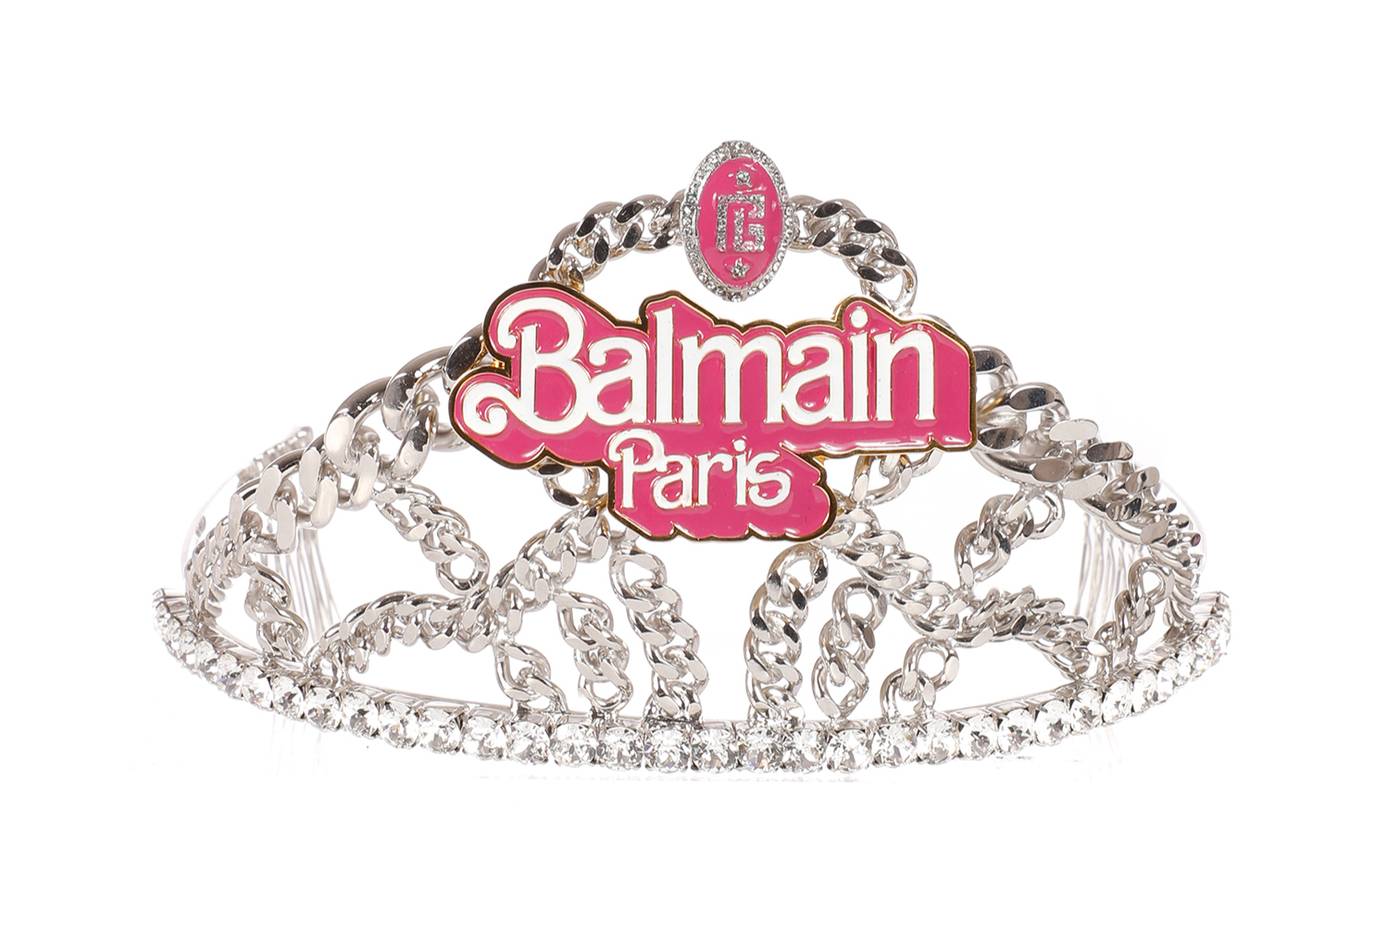 Balmain X Barbie Pop-Up Launches at Neiman Marcus Northpark in Dallas